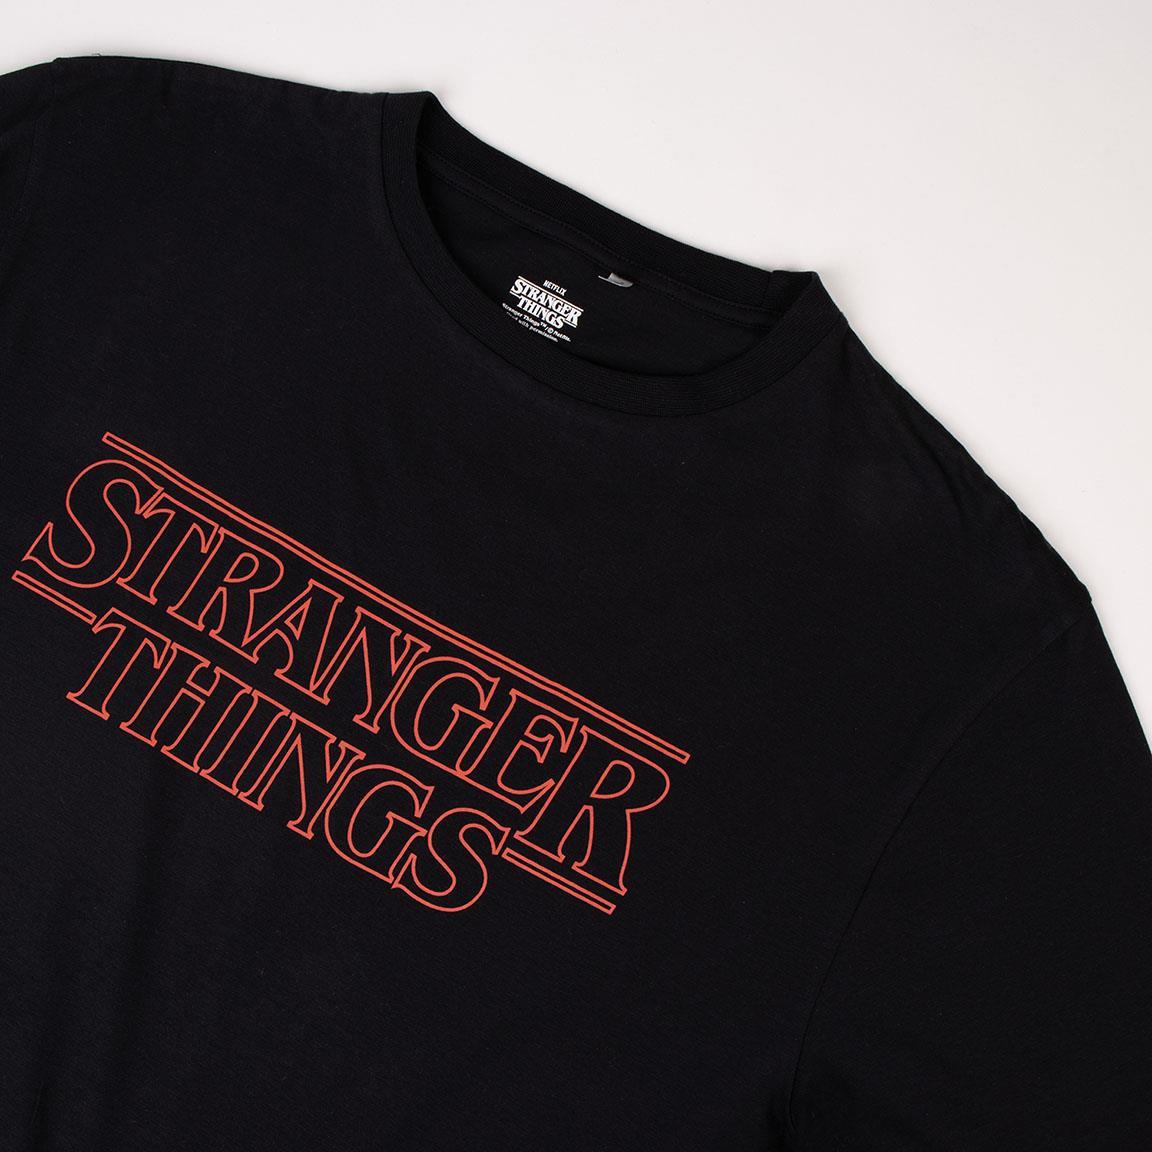 T-Shirt Unisex - Stranger Things - Magic Dreams Store